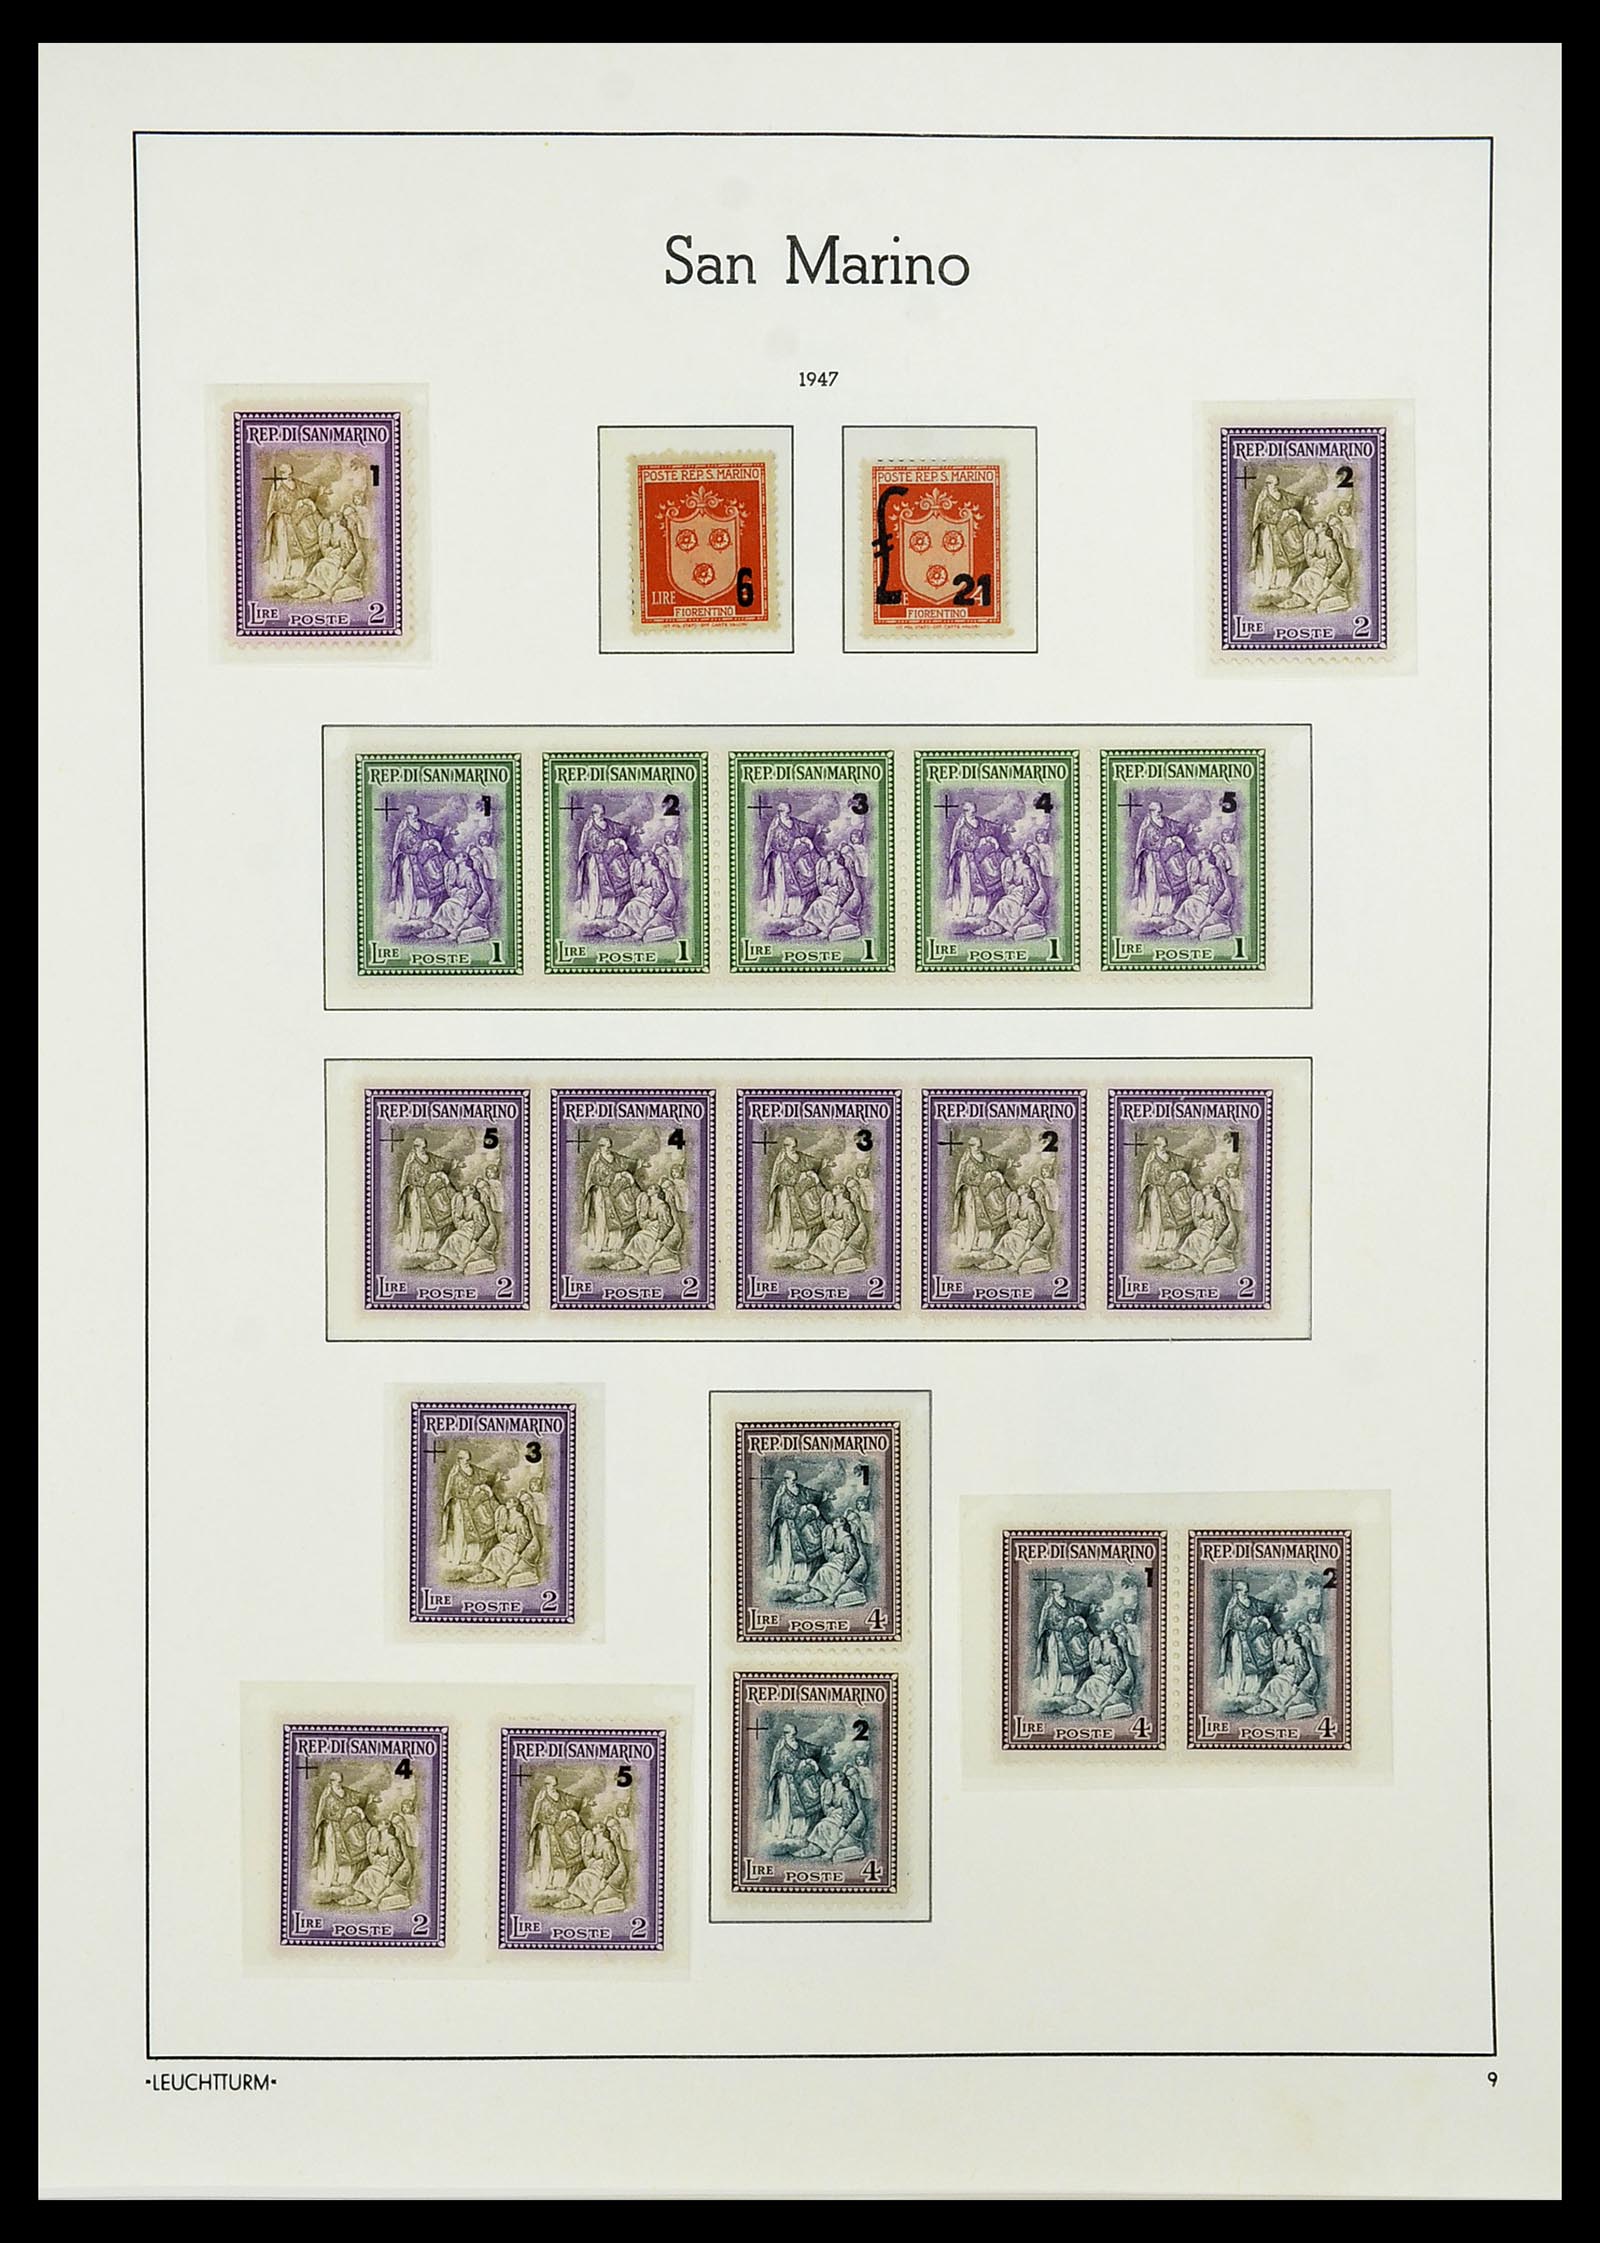 34243 043 - Stamp collection 34243 San Marino 1877-2008.